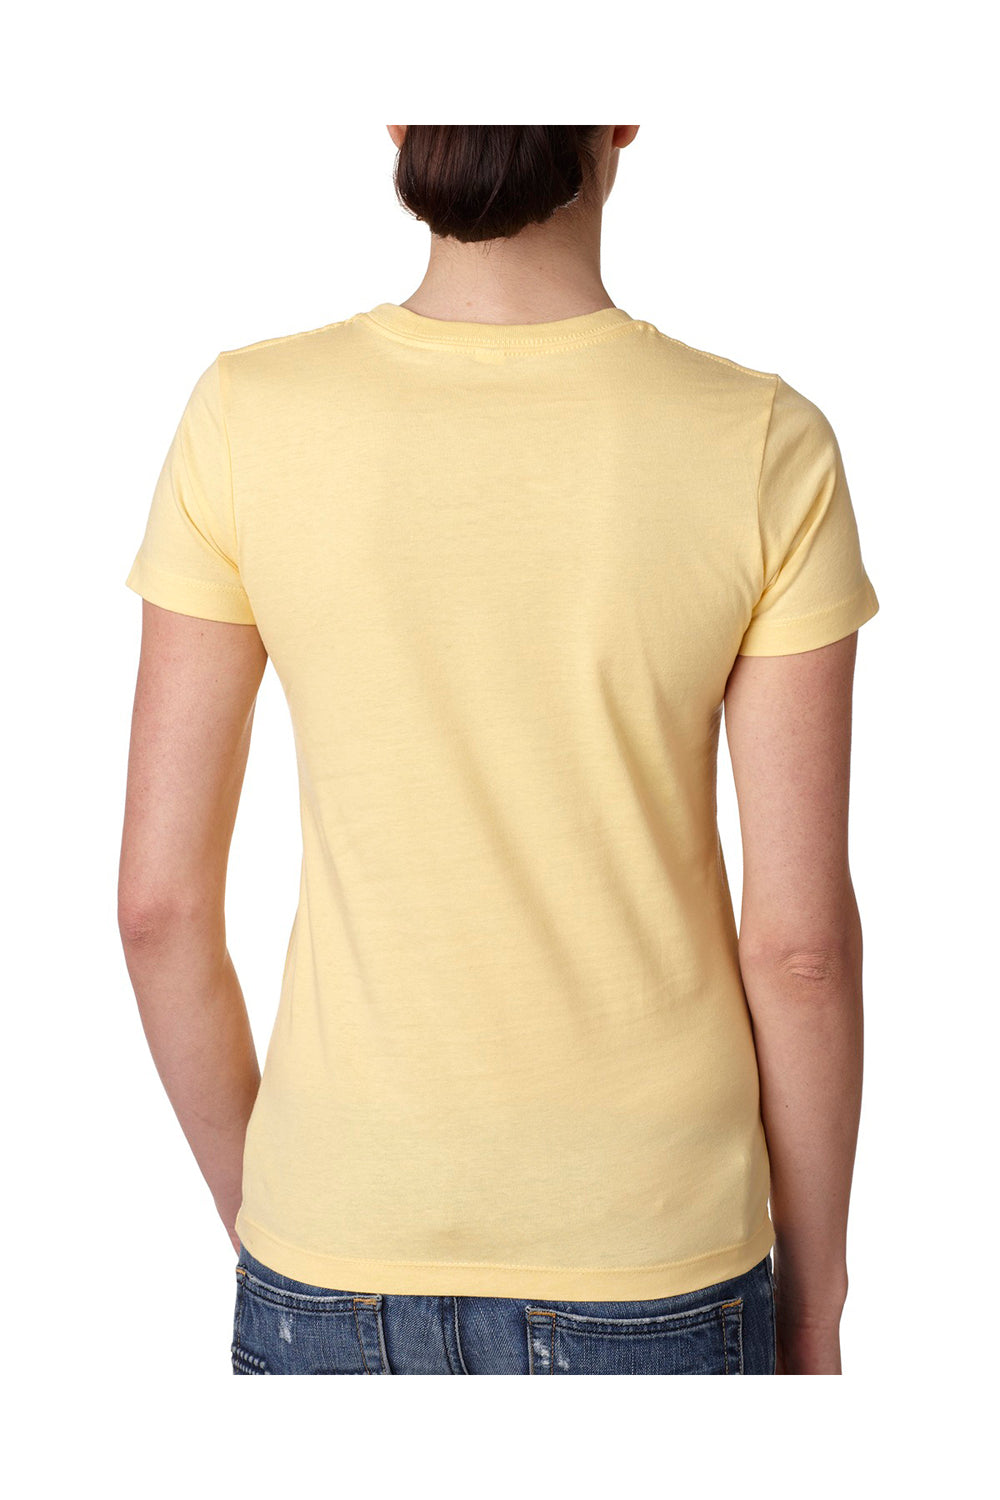 Next Level N3900 Womens Boyfriend Fine Jersey Short Sleeve Crewneck T-Shirt Yellow Back